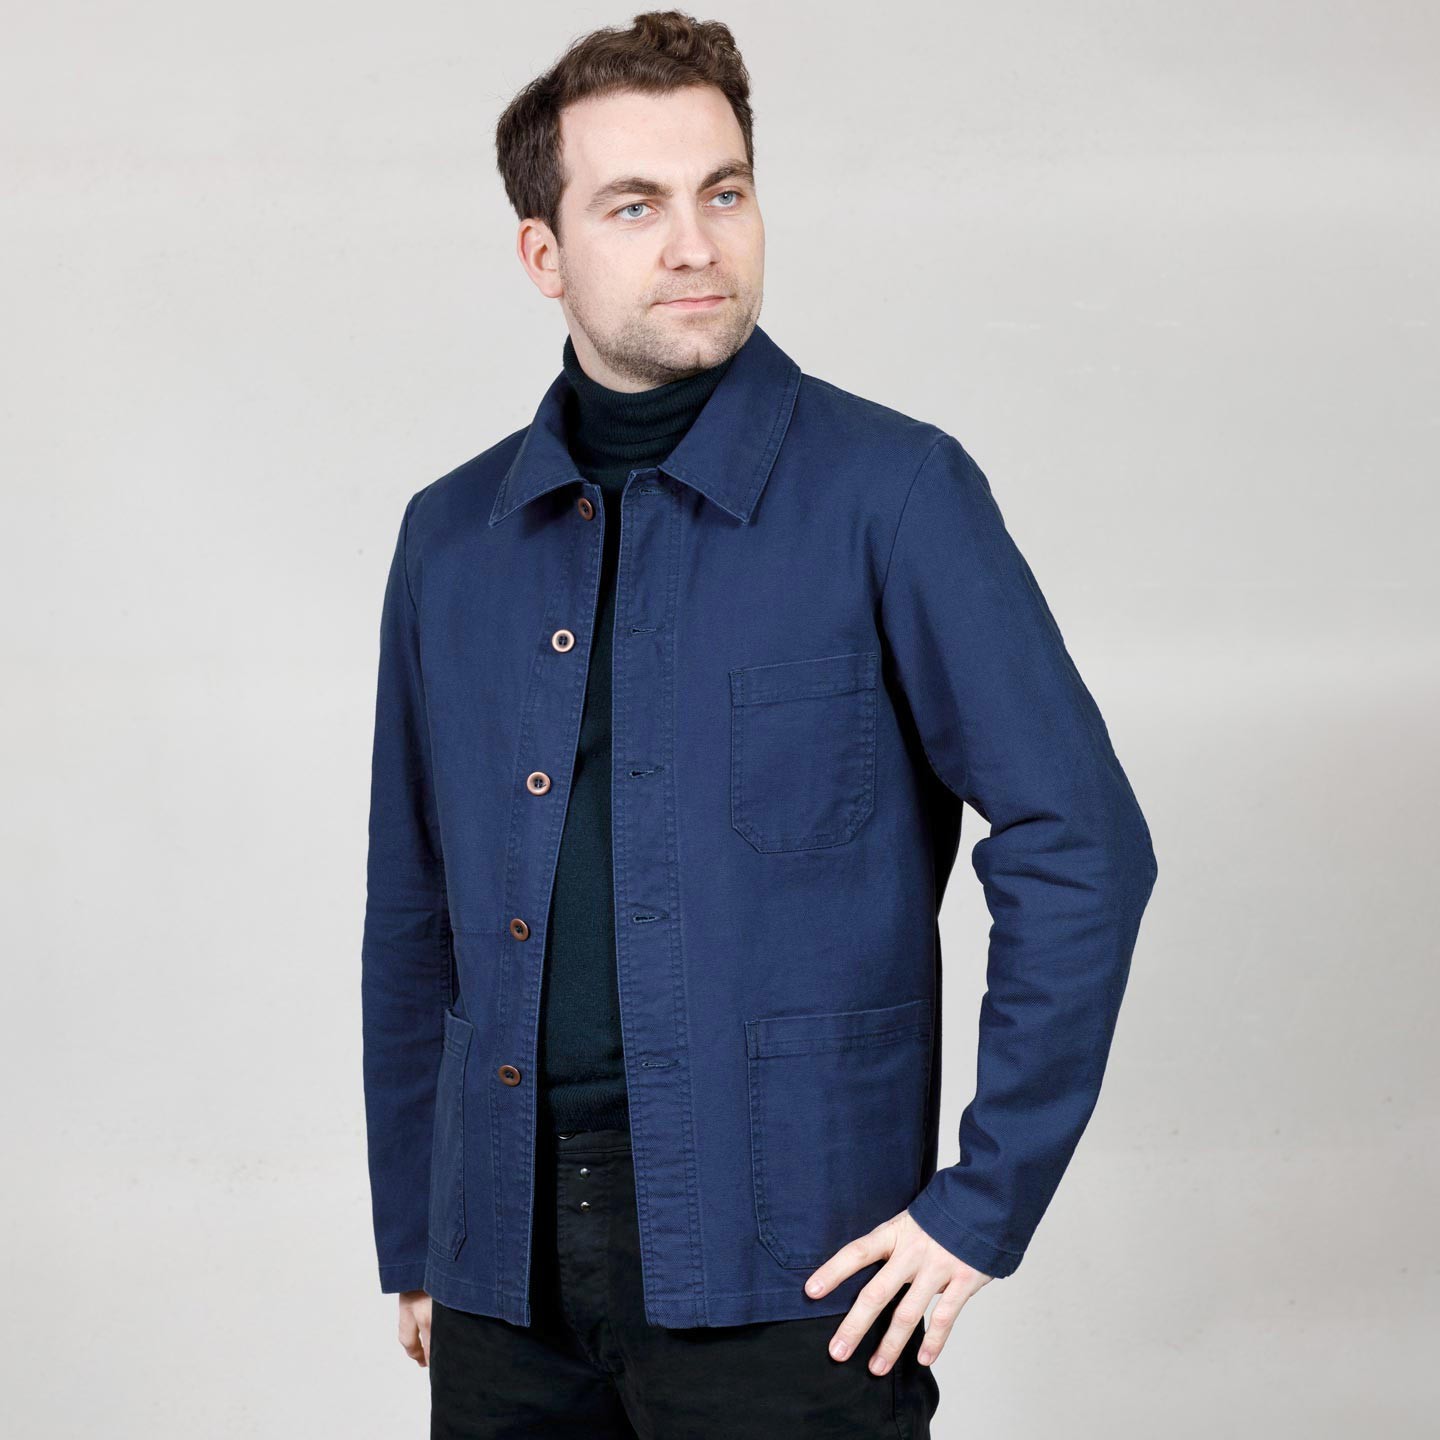 French workwear men's chore jackets - VETRA since 1927